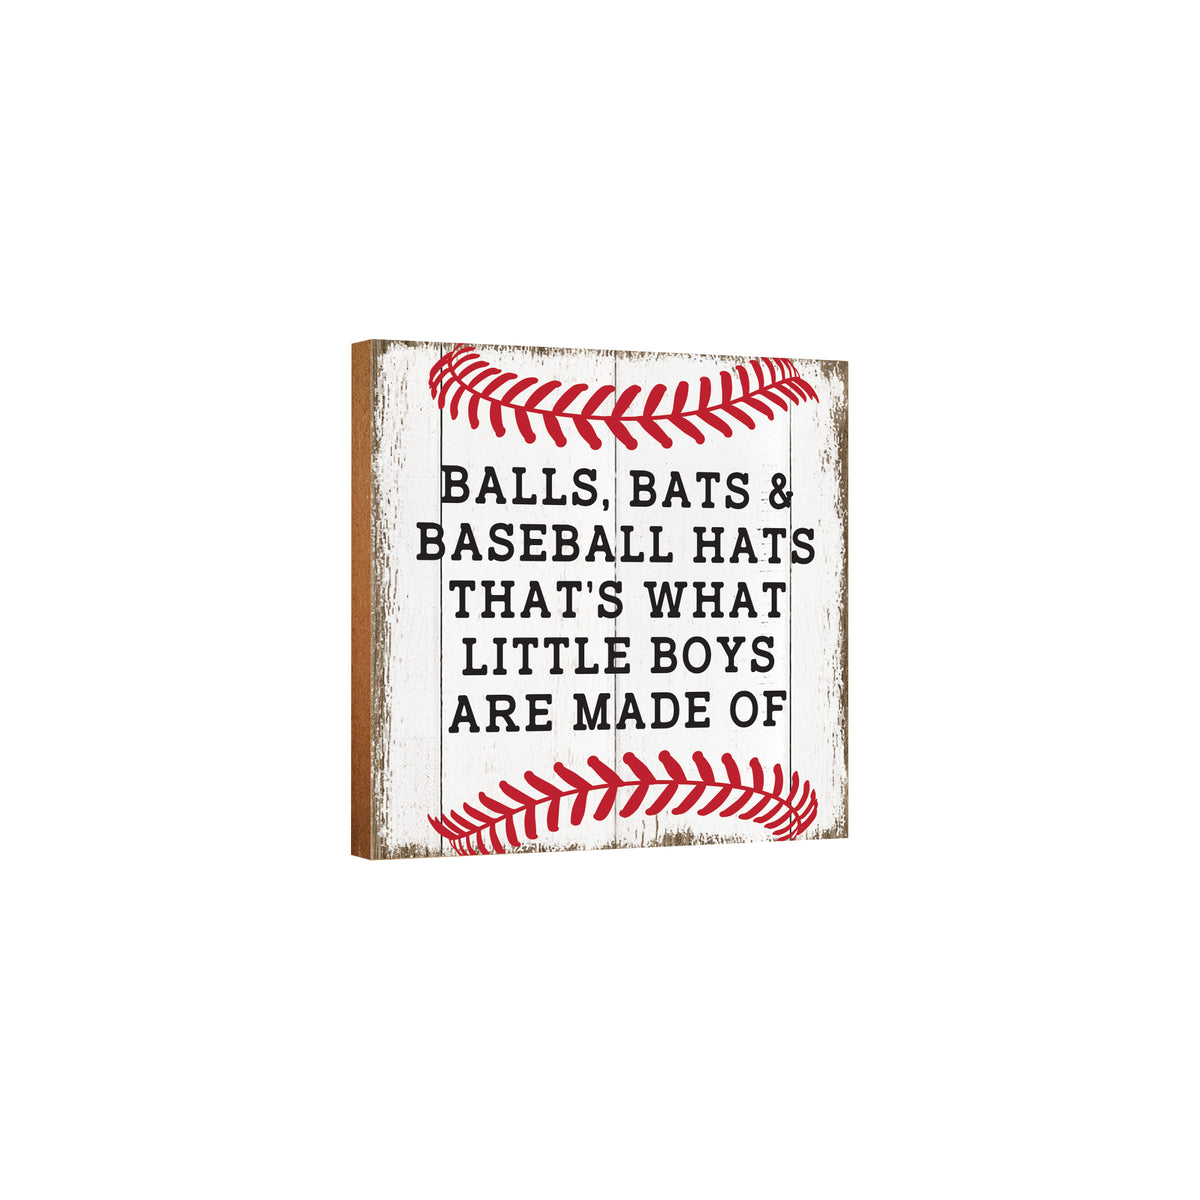 Rustic Wooden Baseball Shadow Box Shelf Décor With Inspiring Bible Verses - Balls Bats Baseball